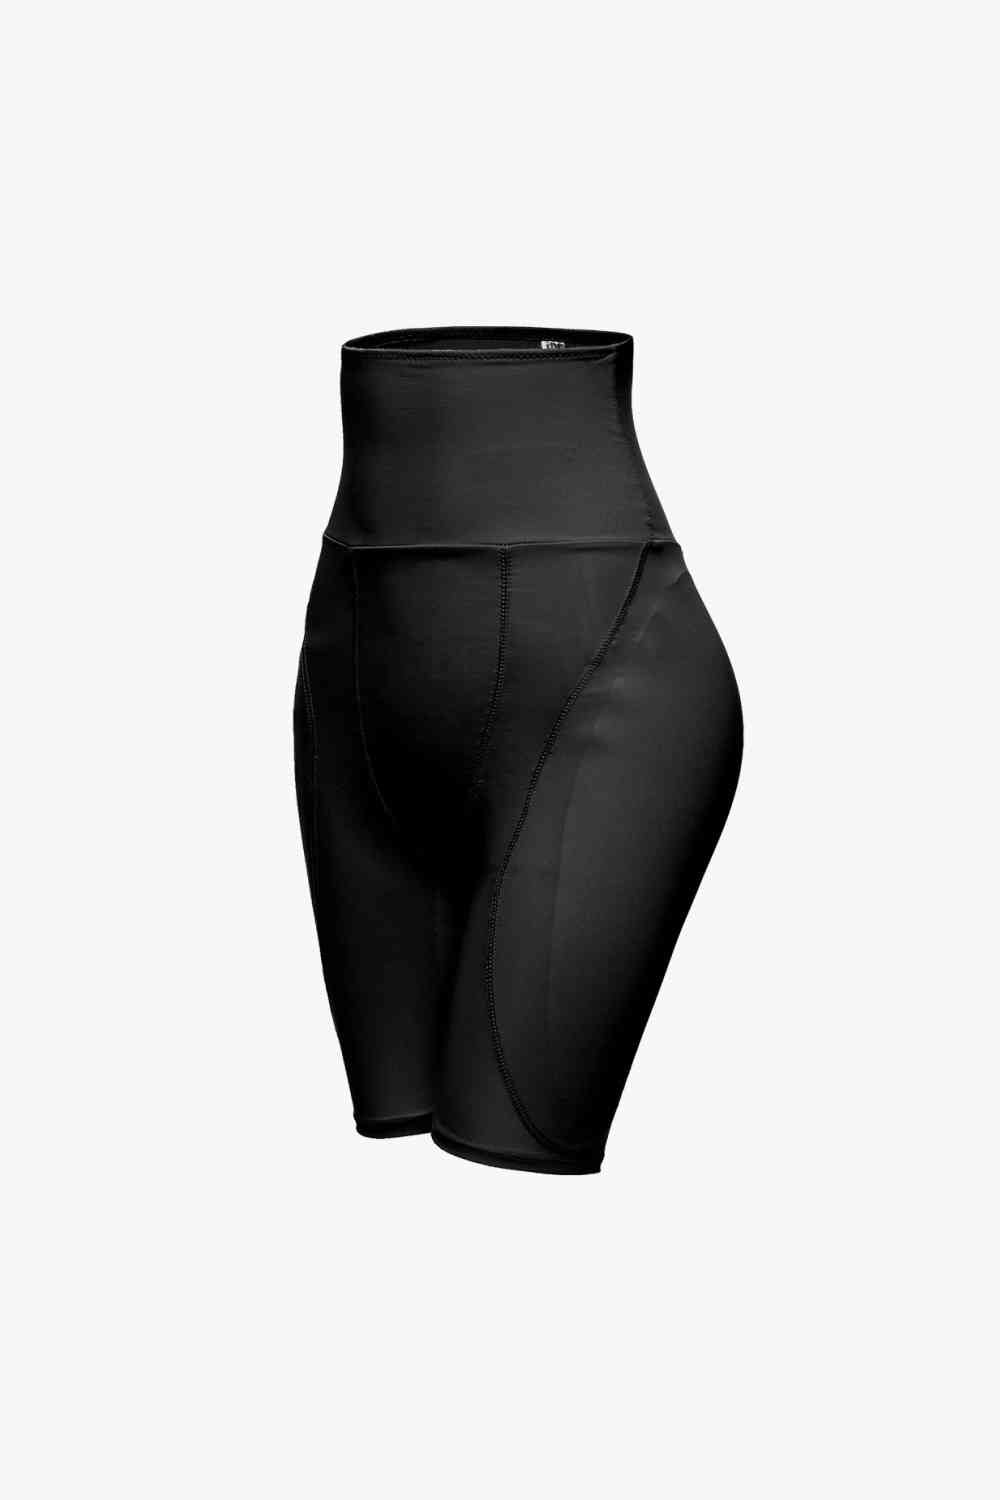 Buy High-Waist Shaper Slip Shorts - Order Shapwear online 1121122300 - Victoria's  Secret US